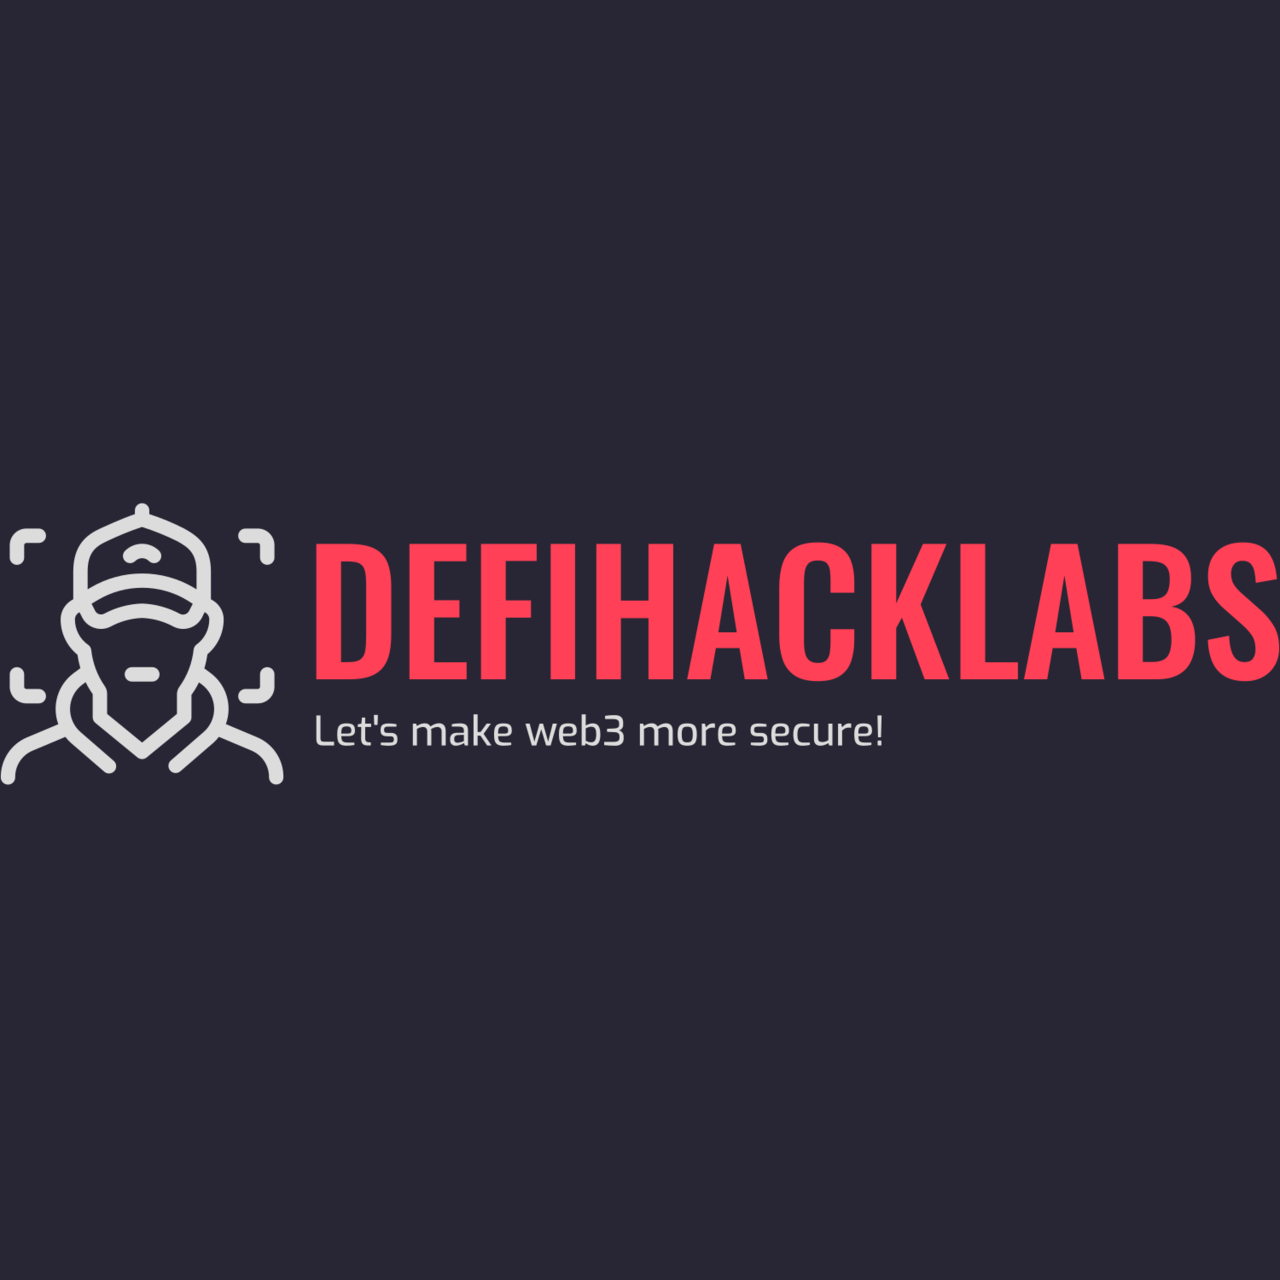 DeFiHackLabs’s Substack